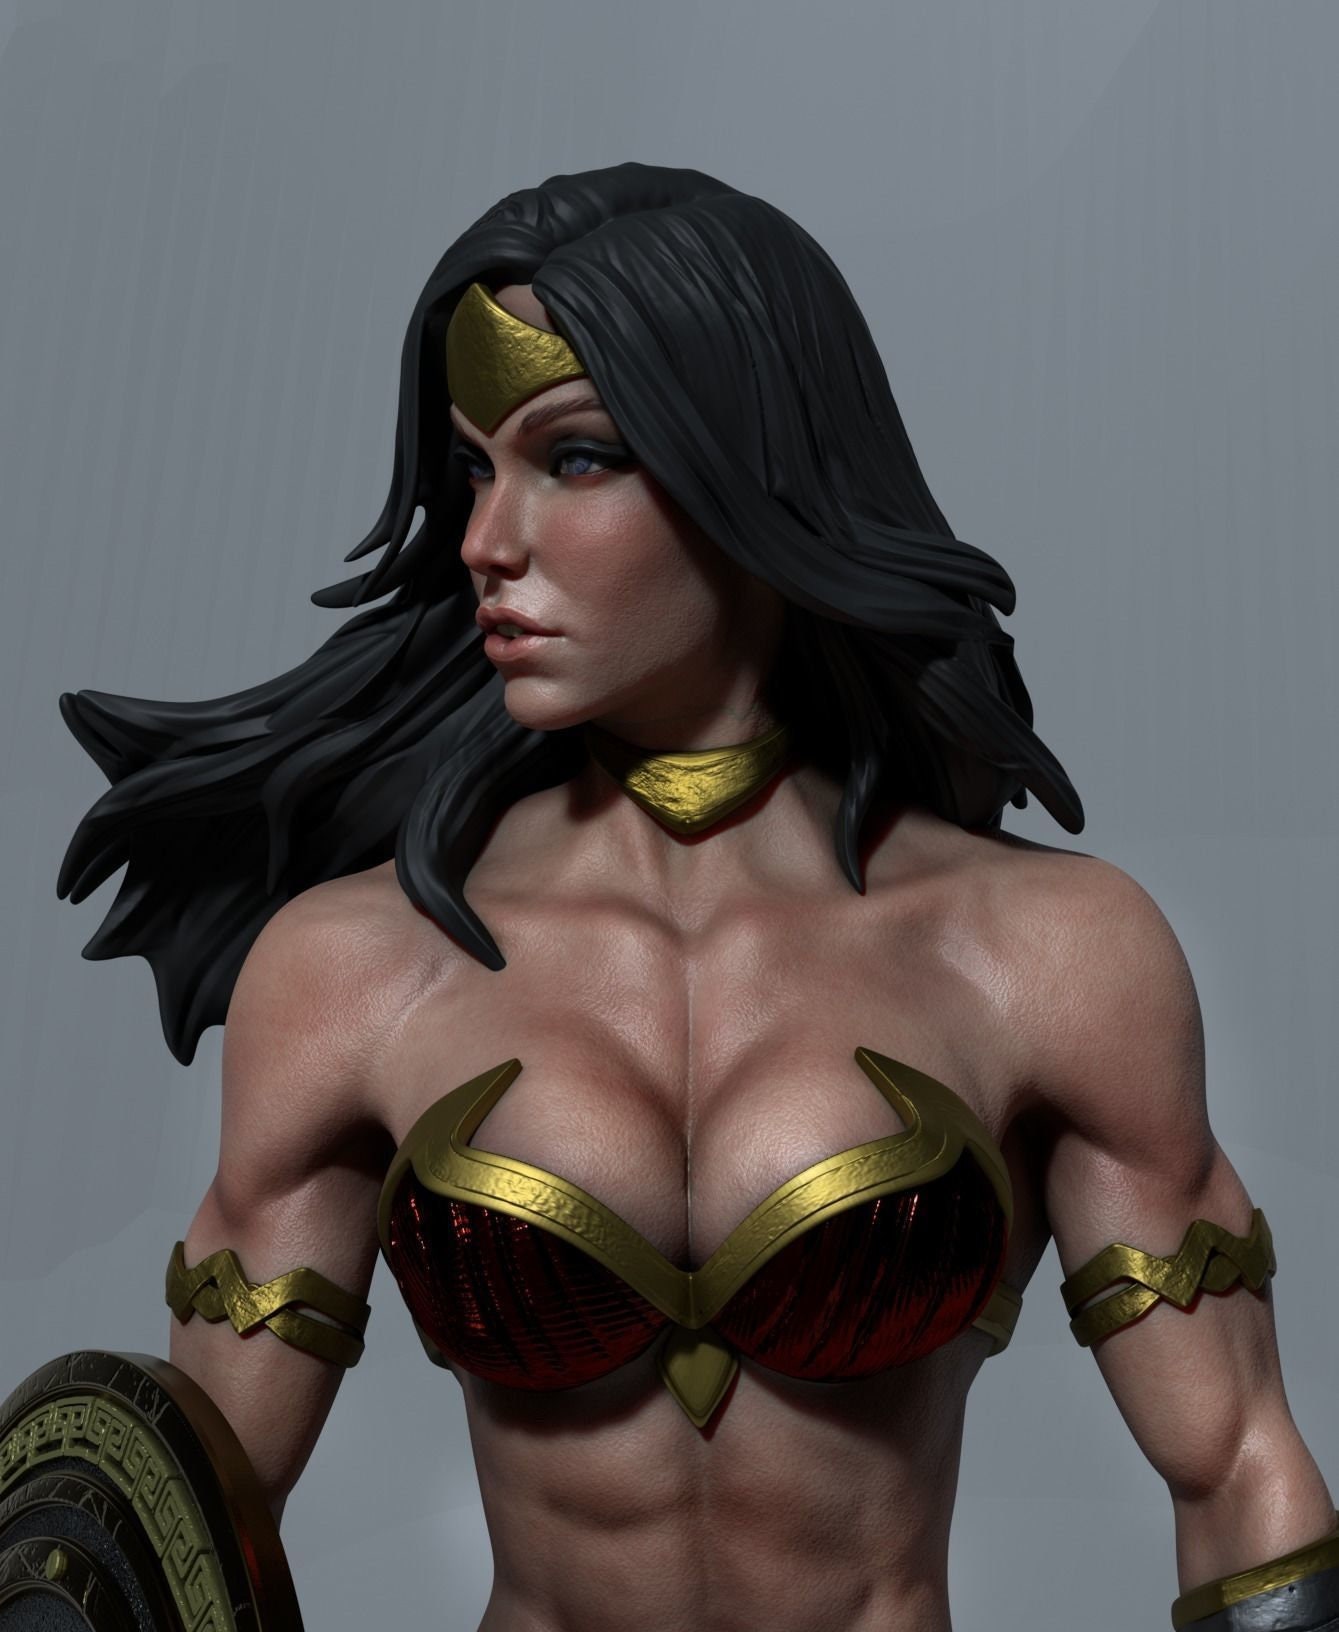 Wonder Woman 110044-6-6x-Size 6 Wonder Woman Girls Patriot Ruffle Bikini  Swimsuit - Size 6-6X 